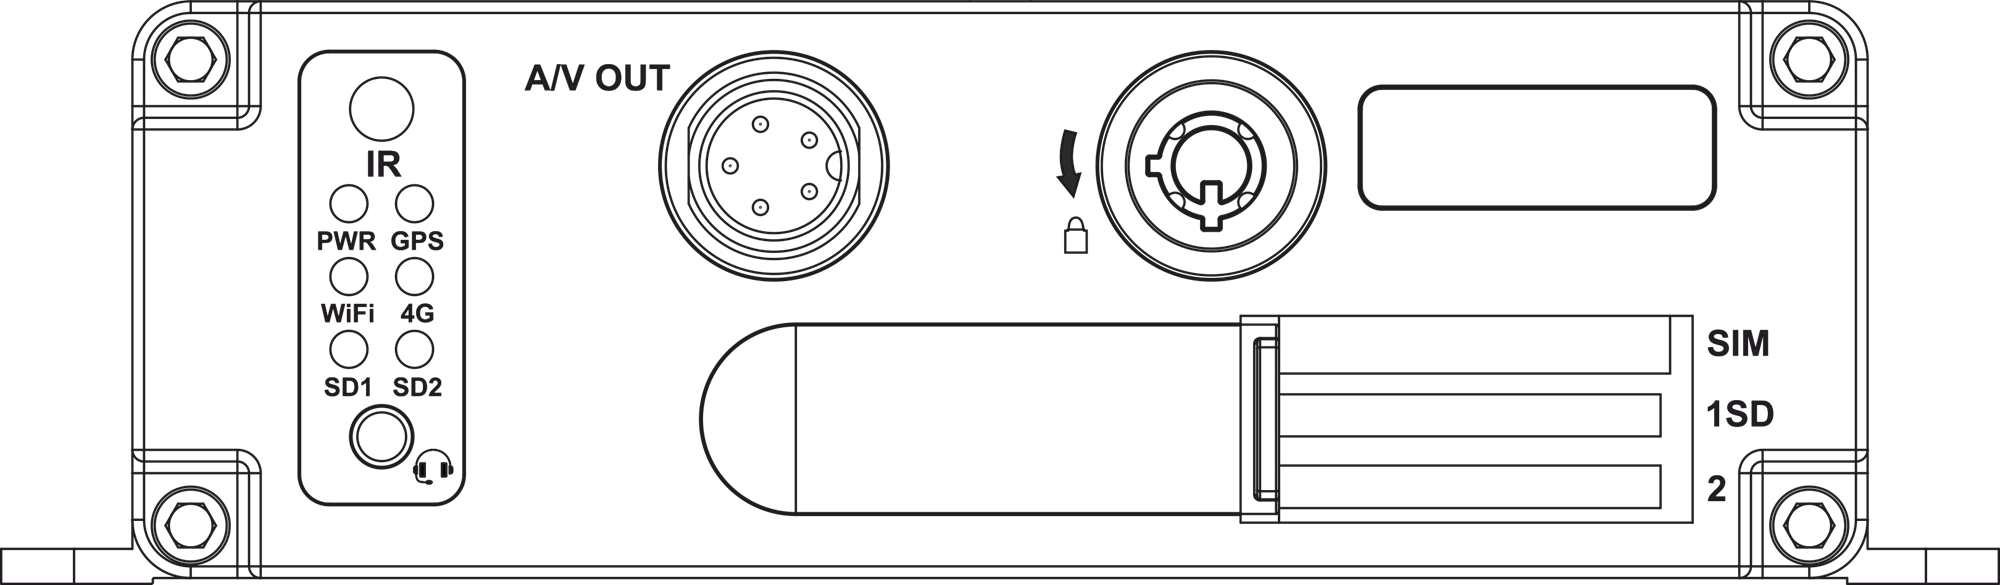 General view of Omnicomm OKO Light Online video recorder 